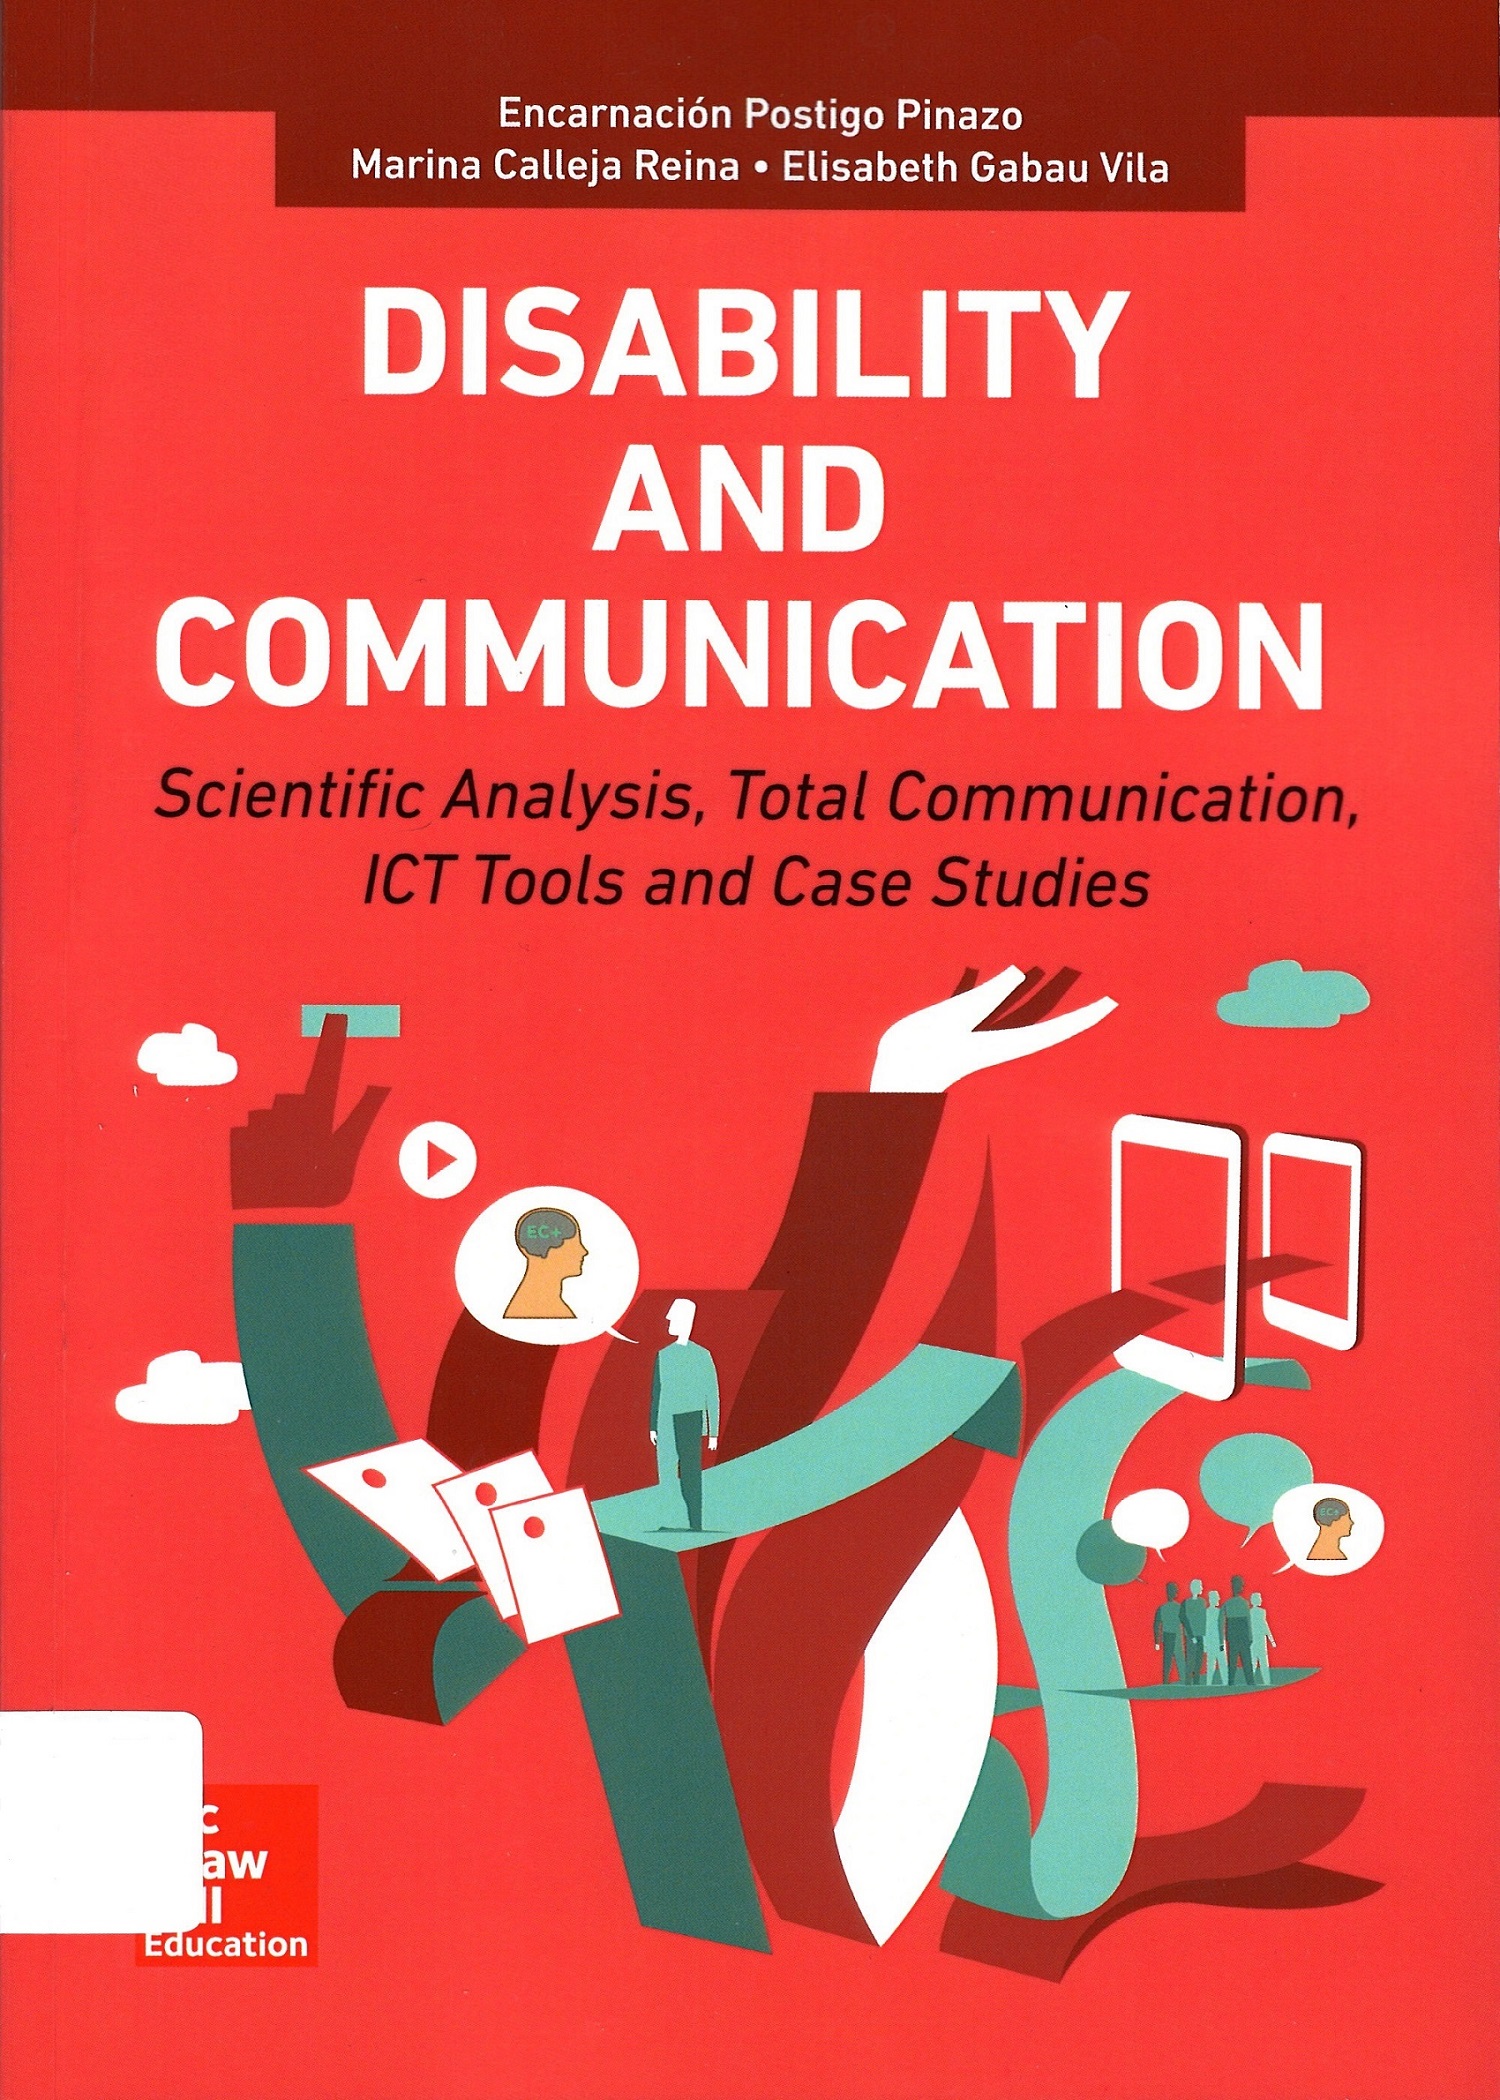 Imagen de portada del libro Disability and communication